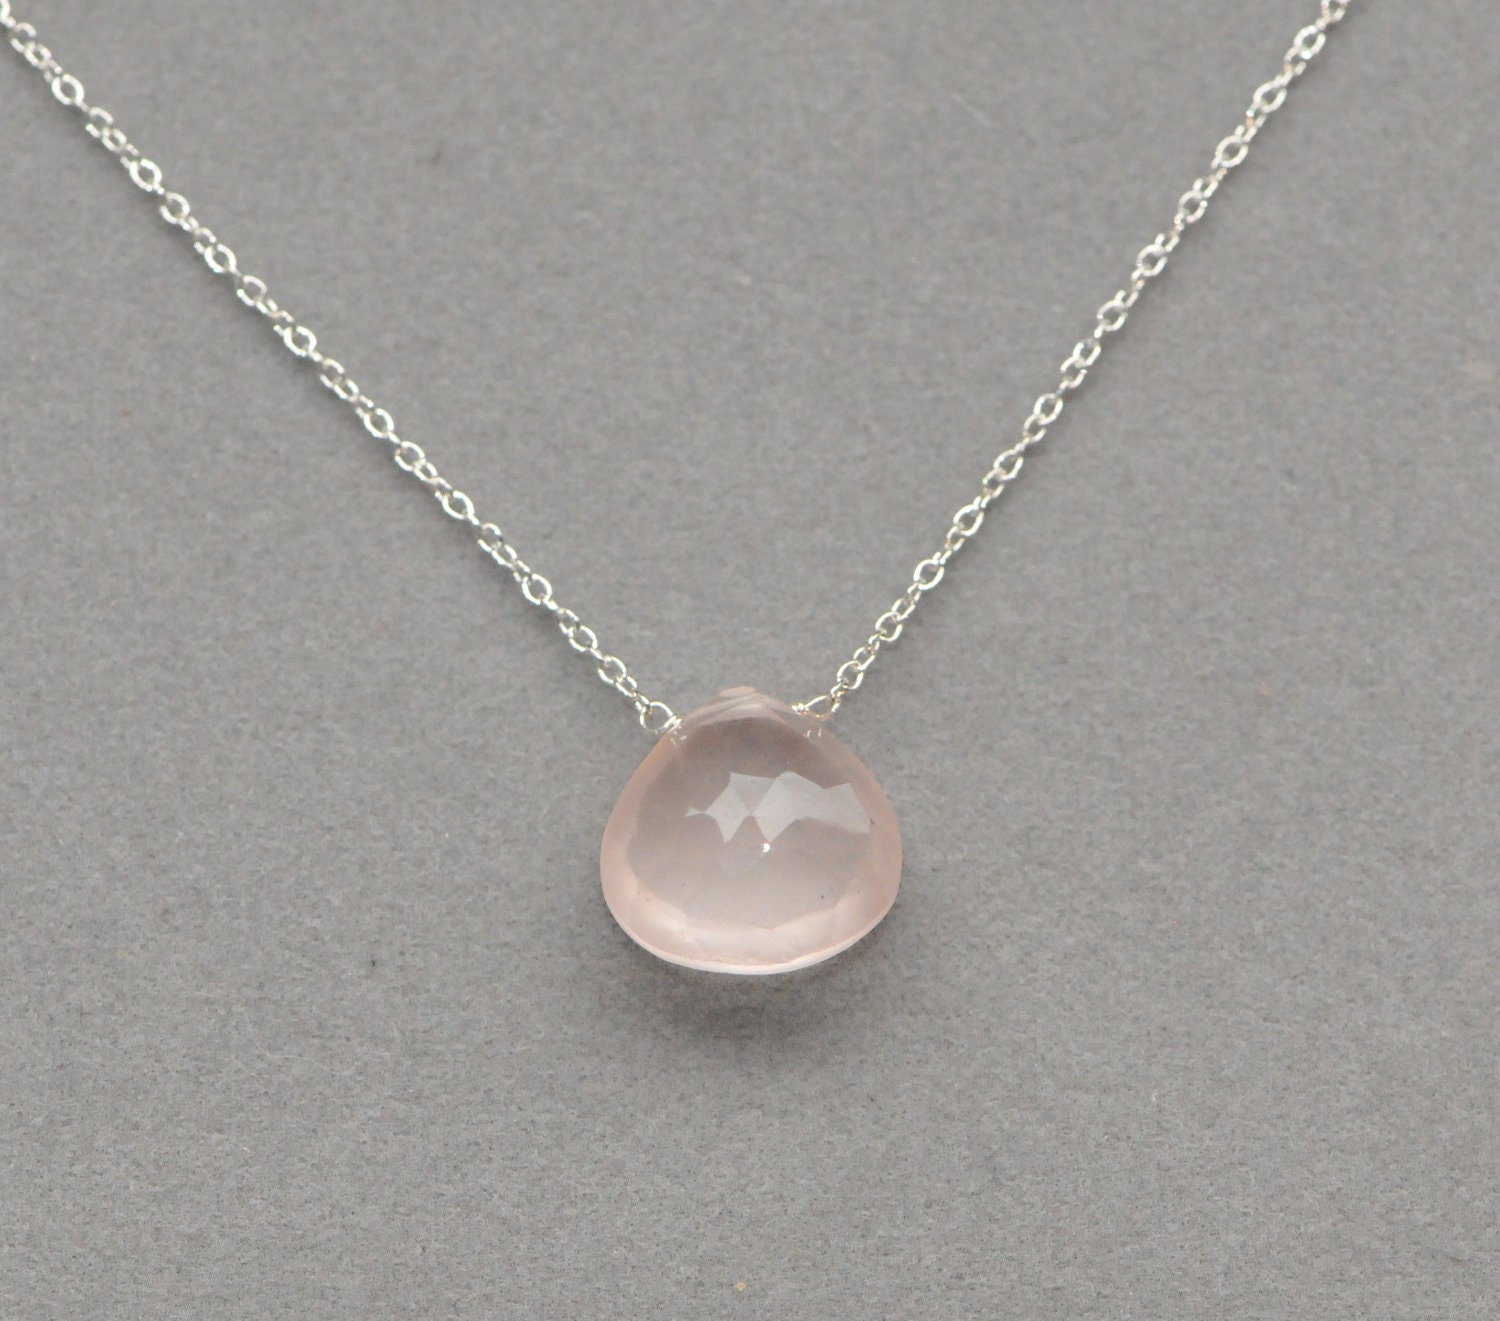 rose quartz necklace pendant on sterling silver chain